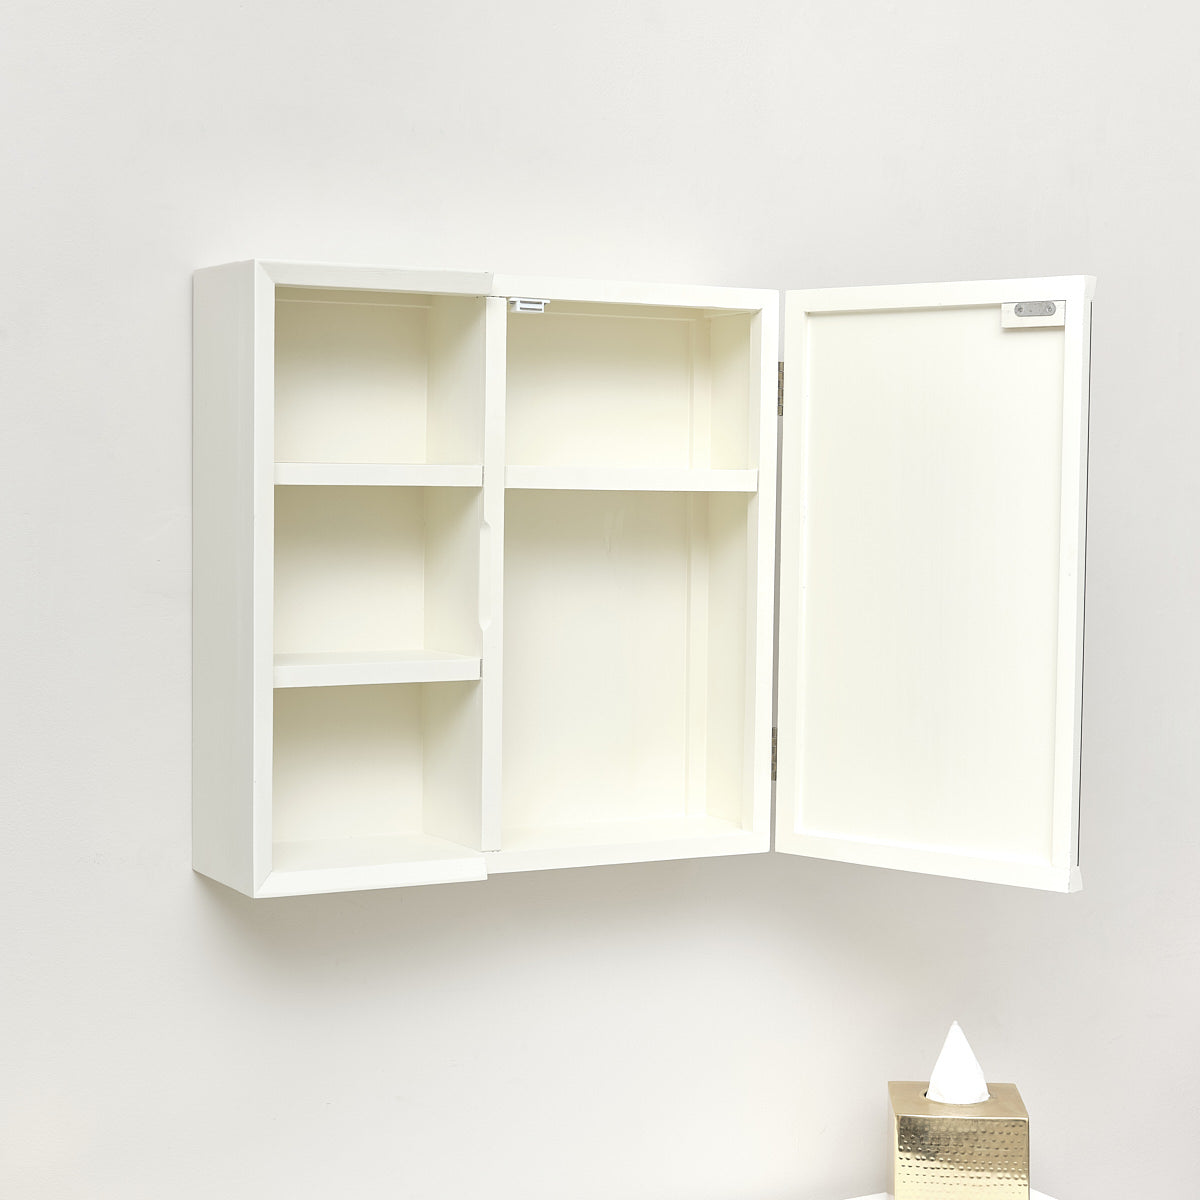 Cream Open Shelved Mirrored Wall Cabinet 53cm x 53cm